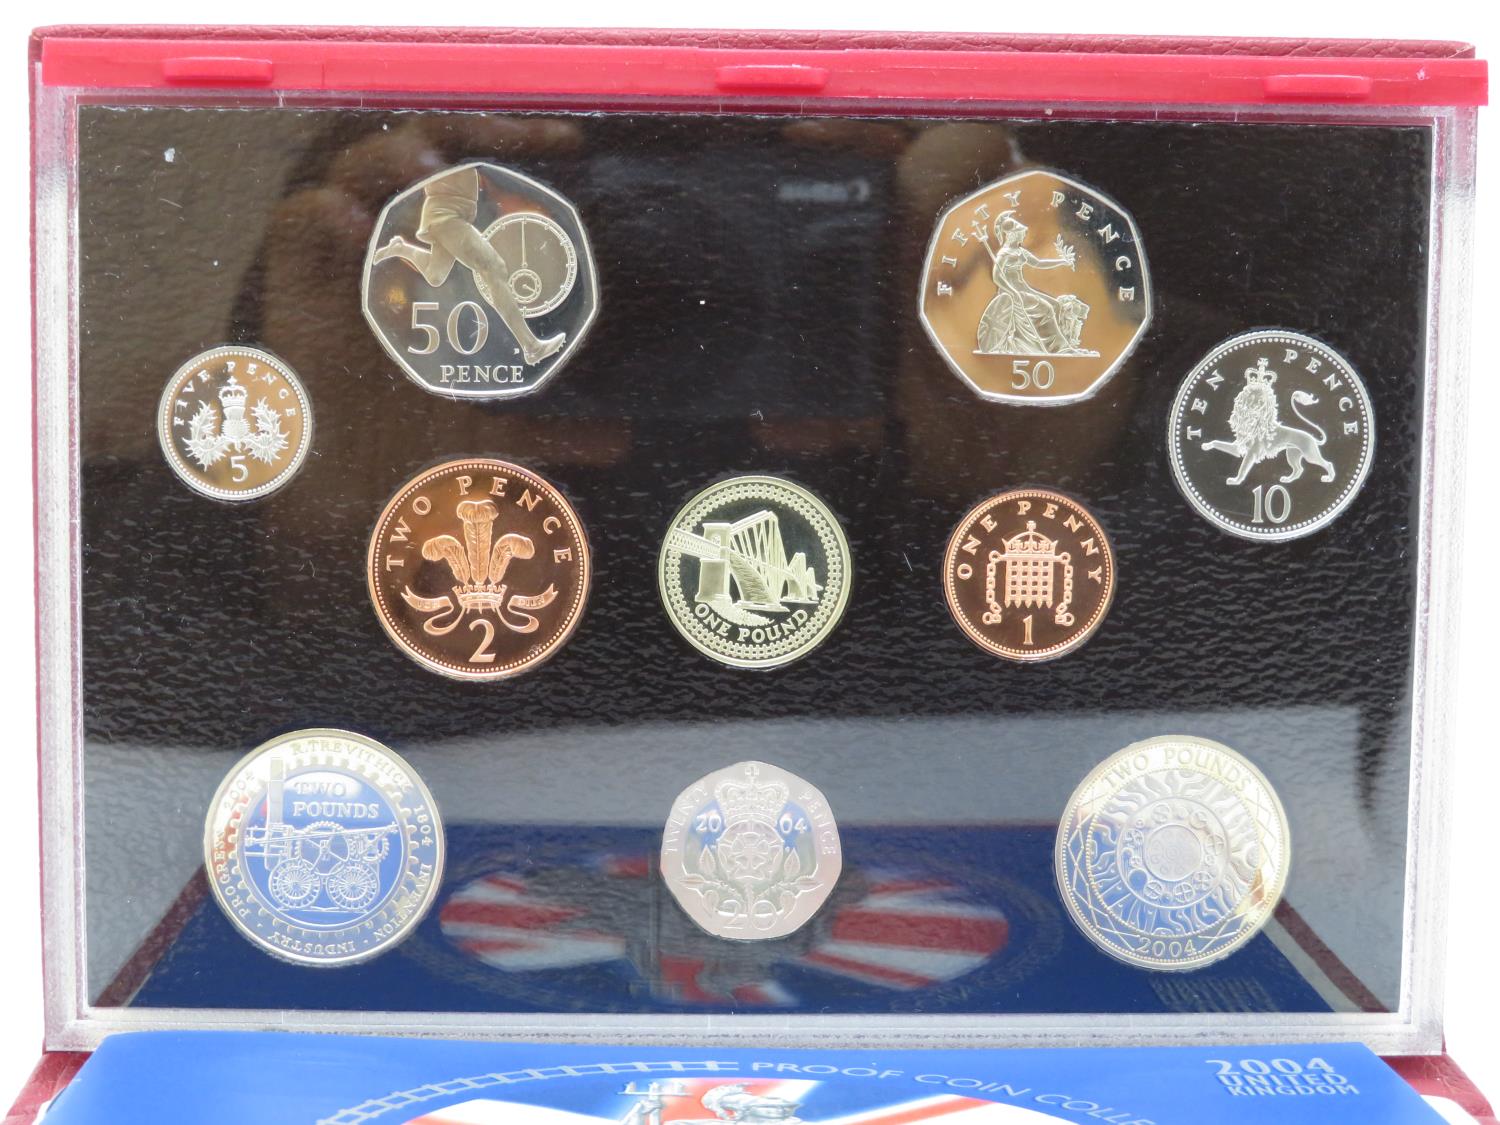 2004 UK Deluxe coin set